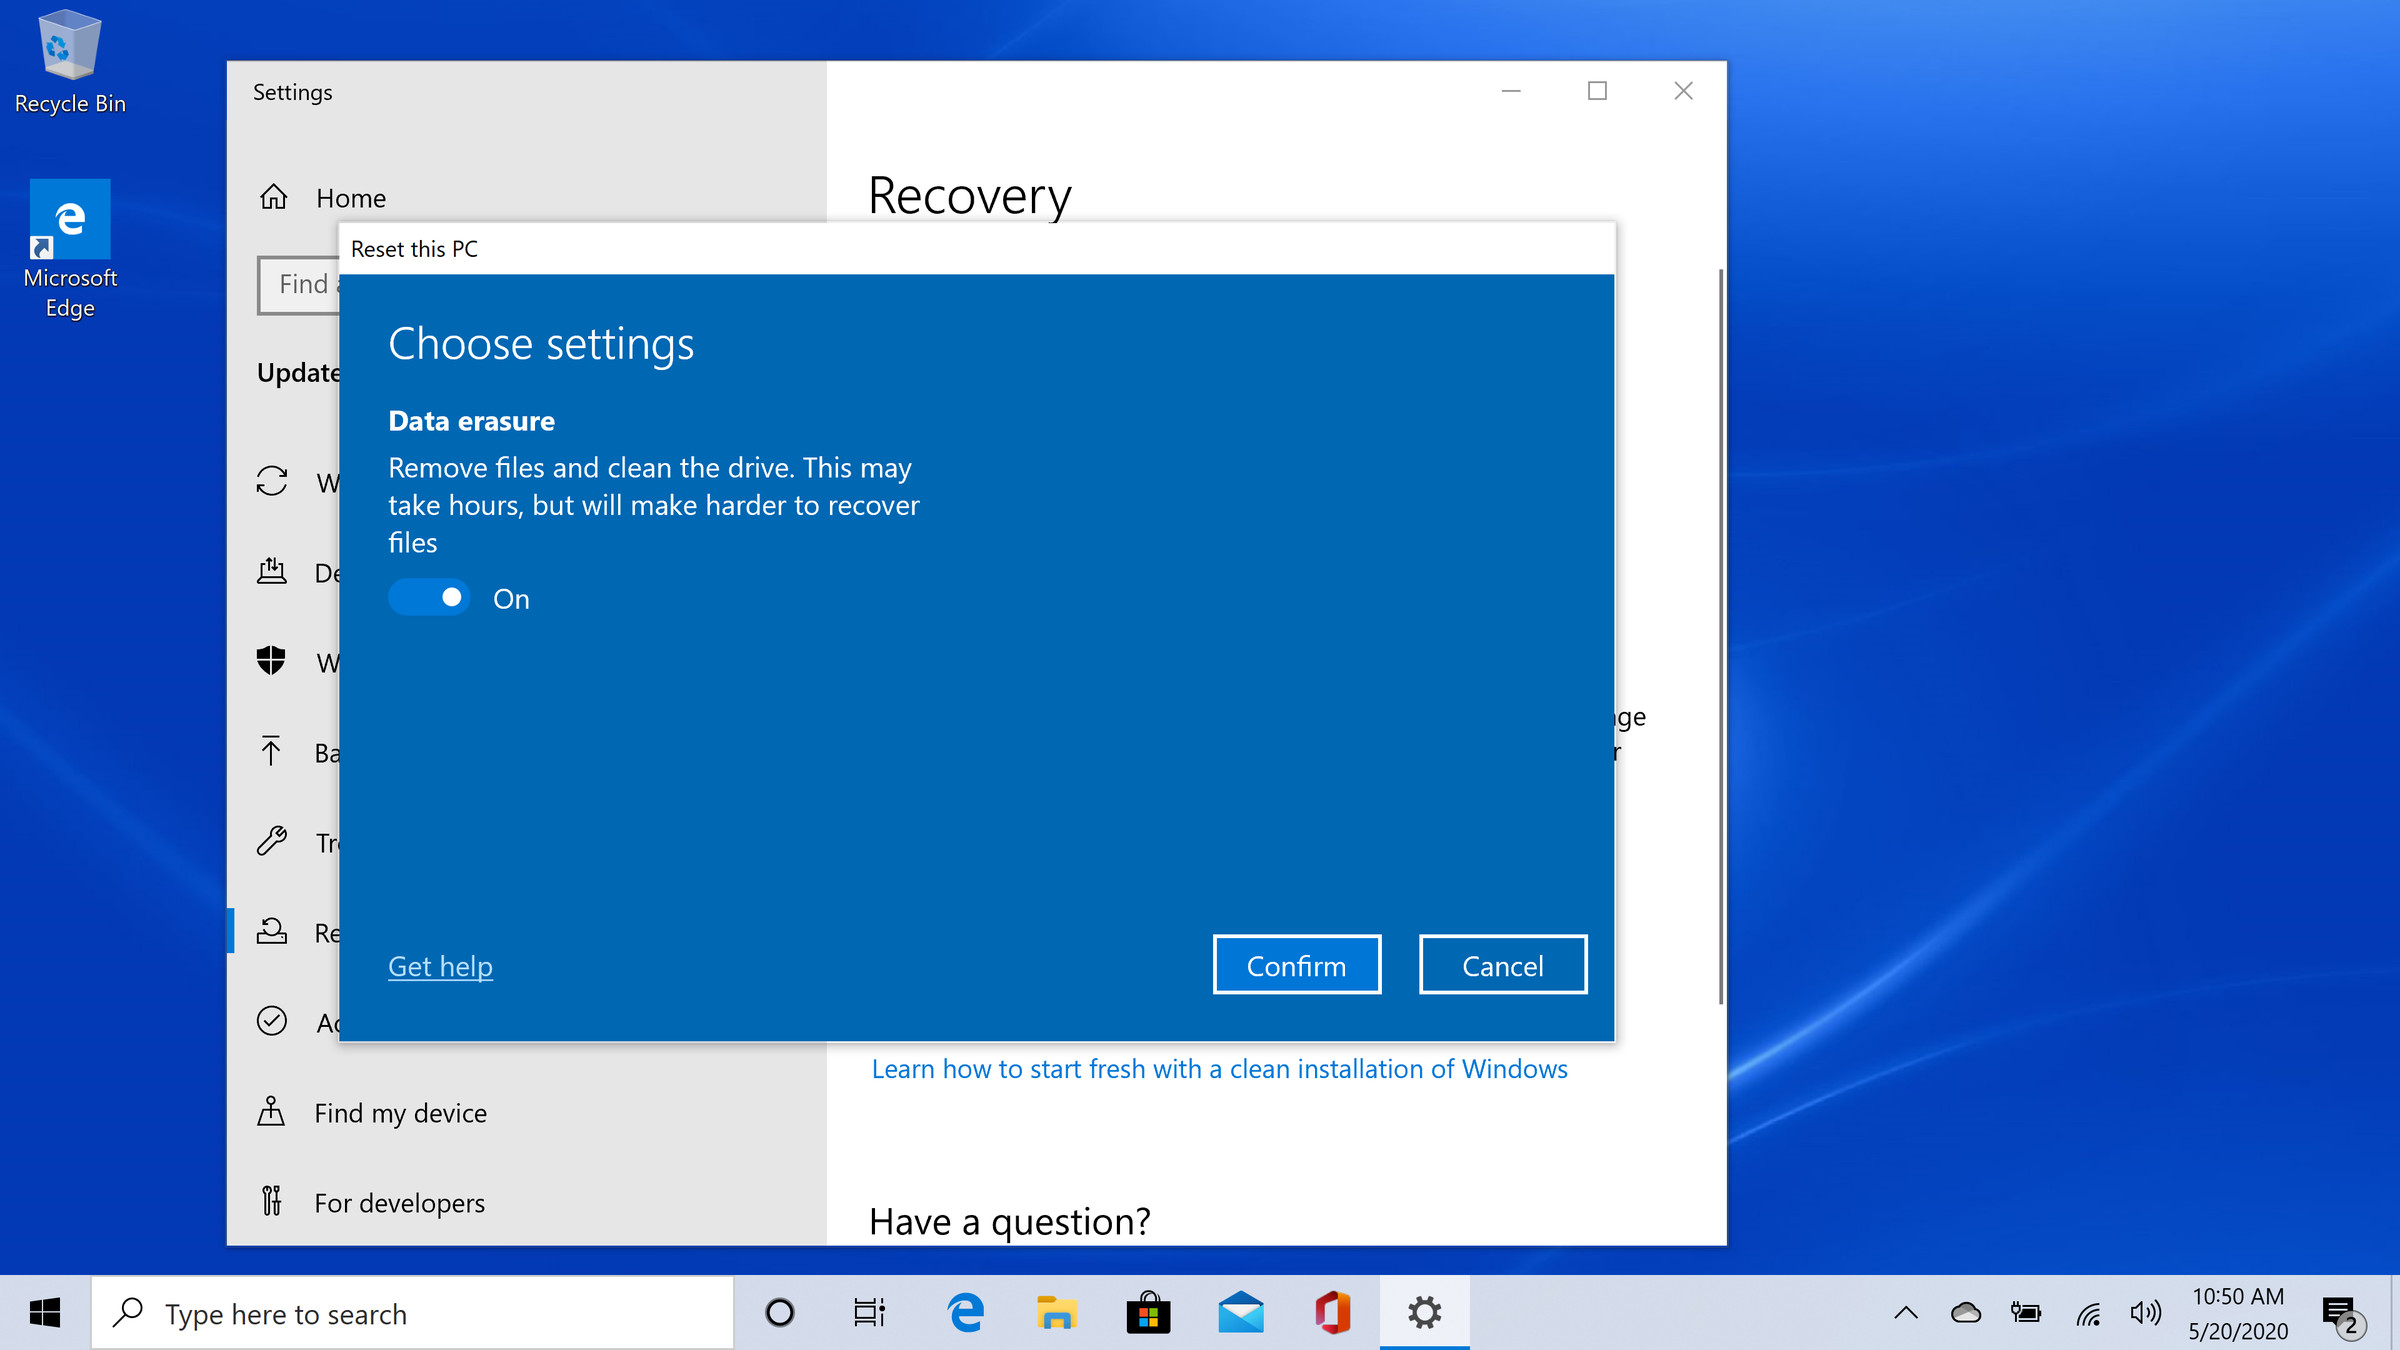 Windows reset data erasure settings